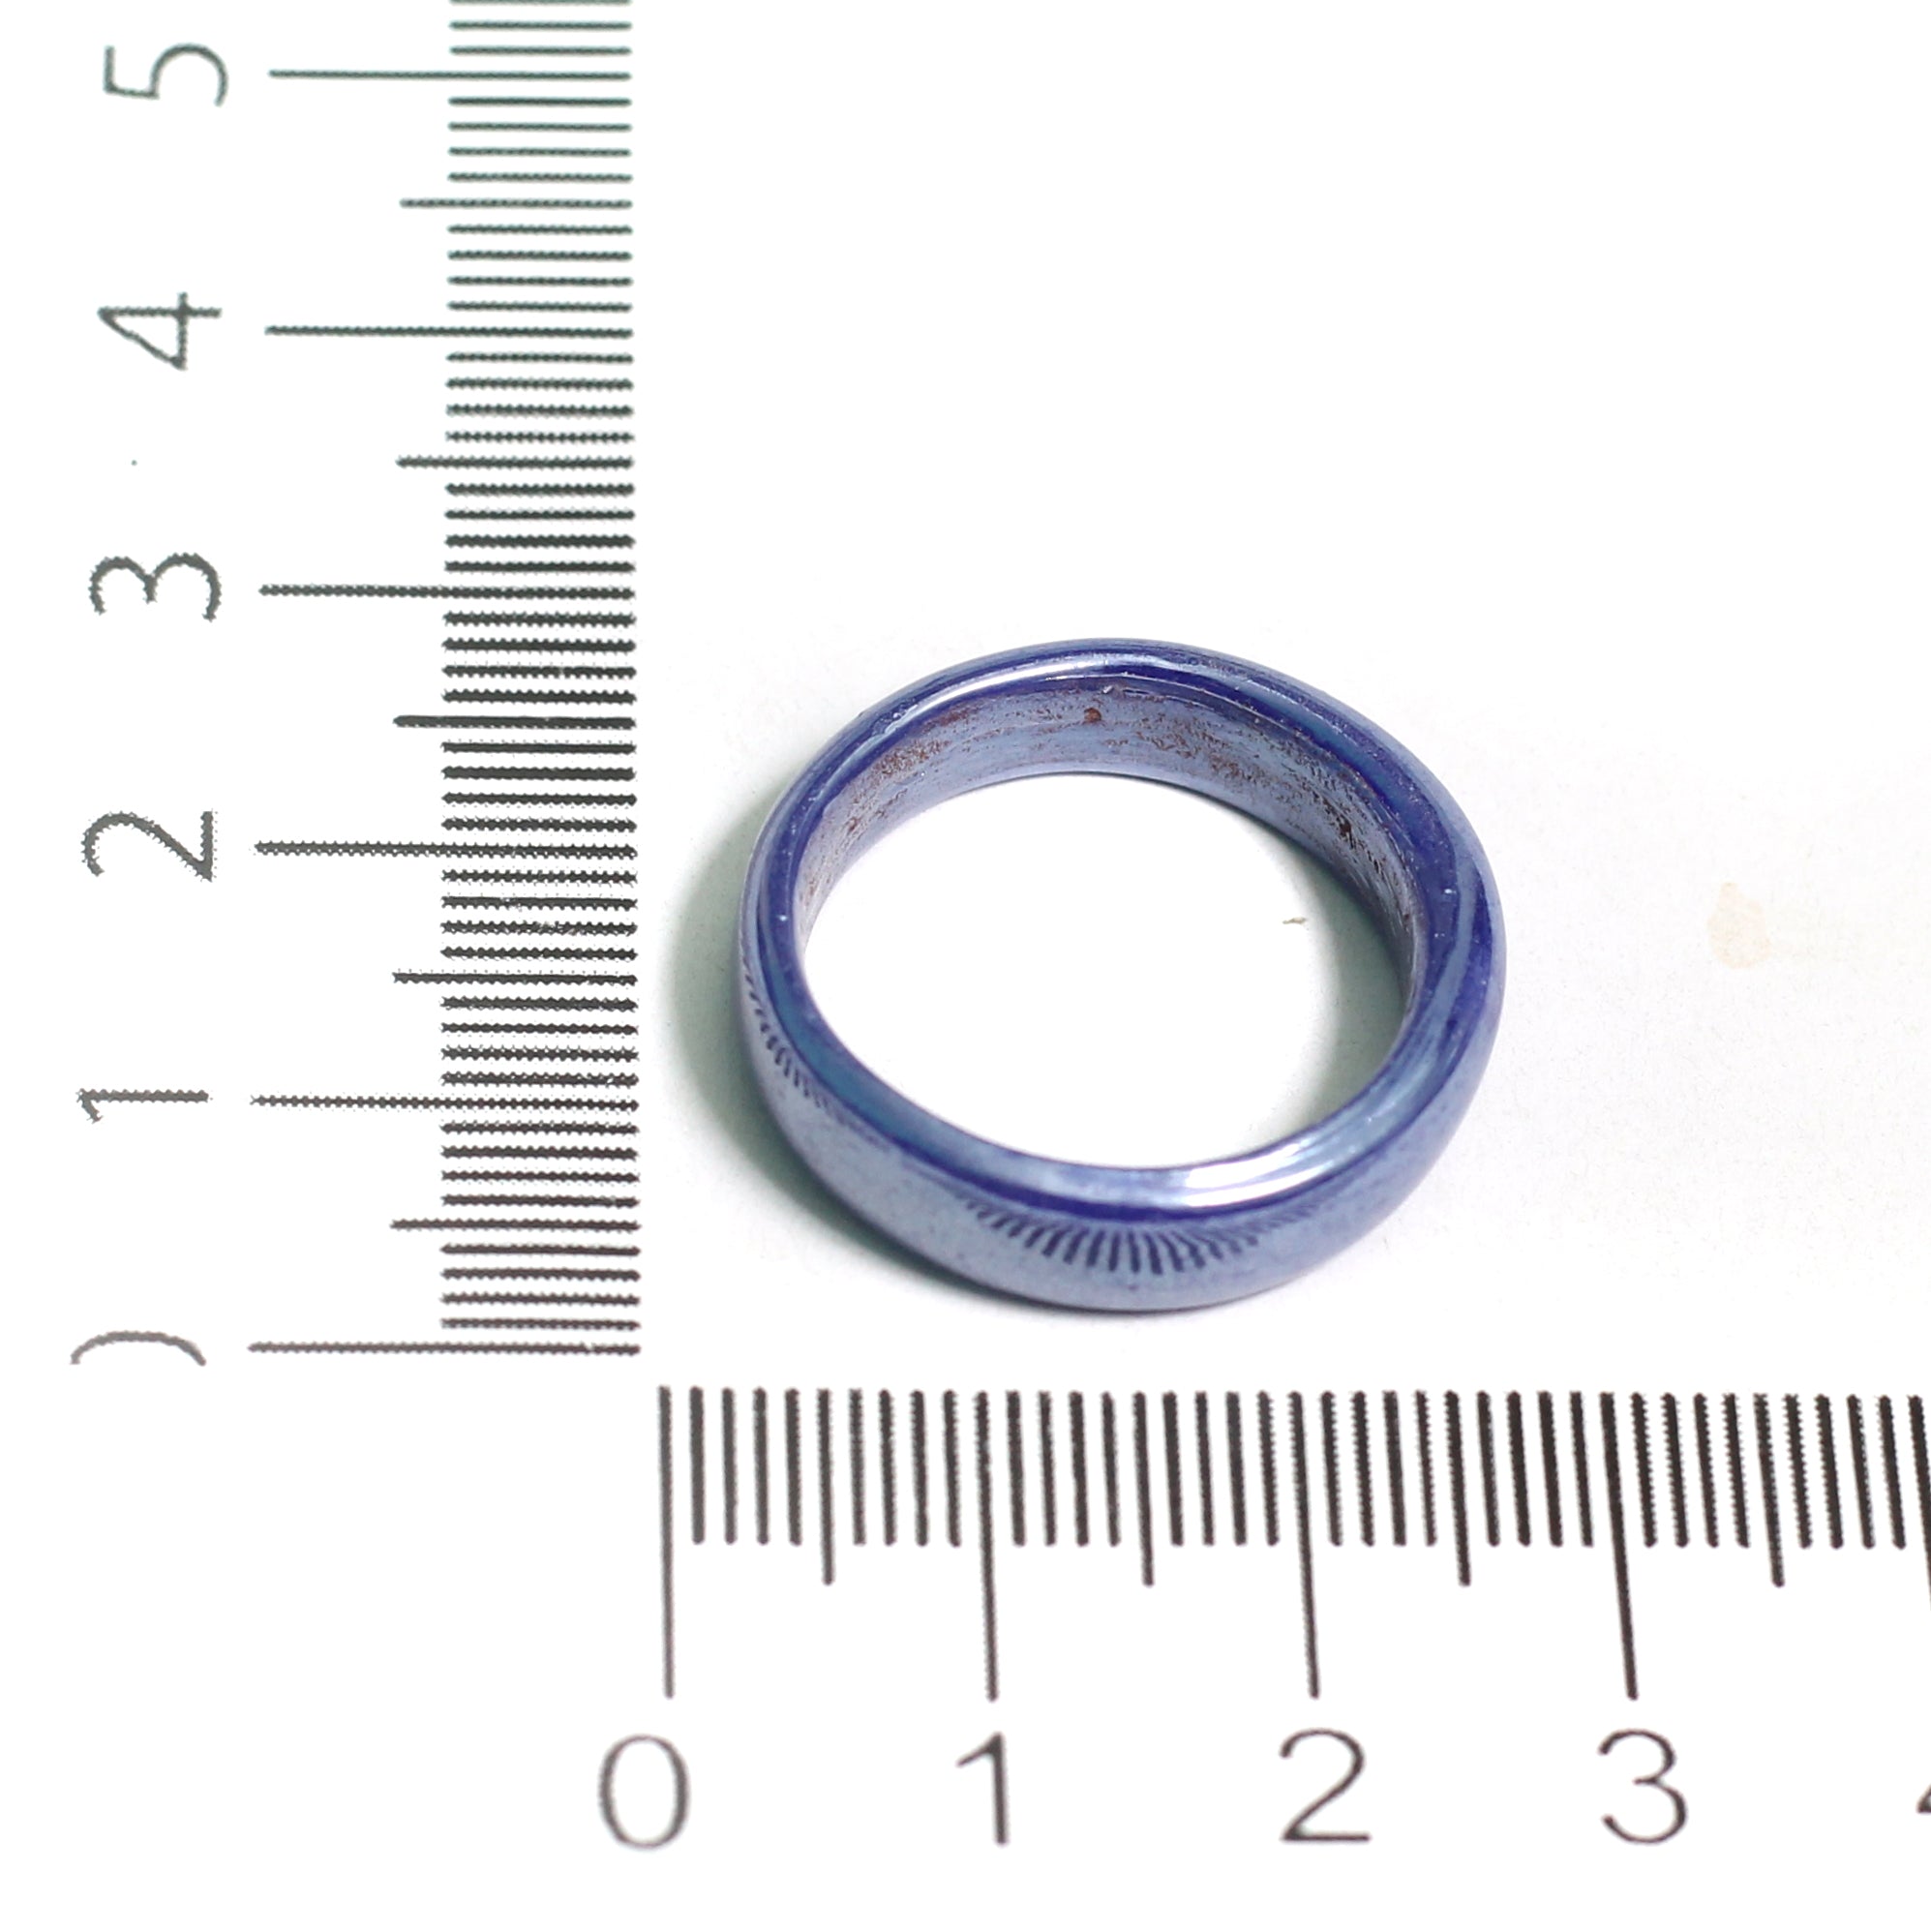 50 Pcs, Assorted Blue Glass Finger Rings